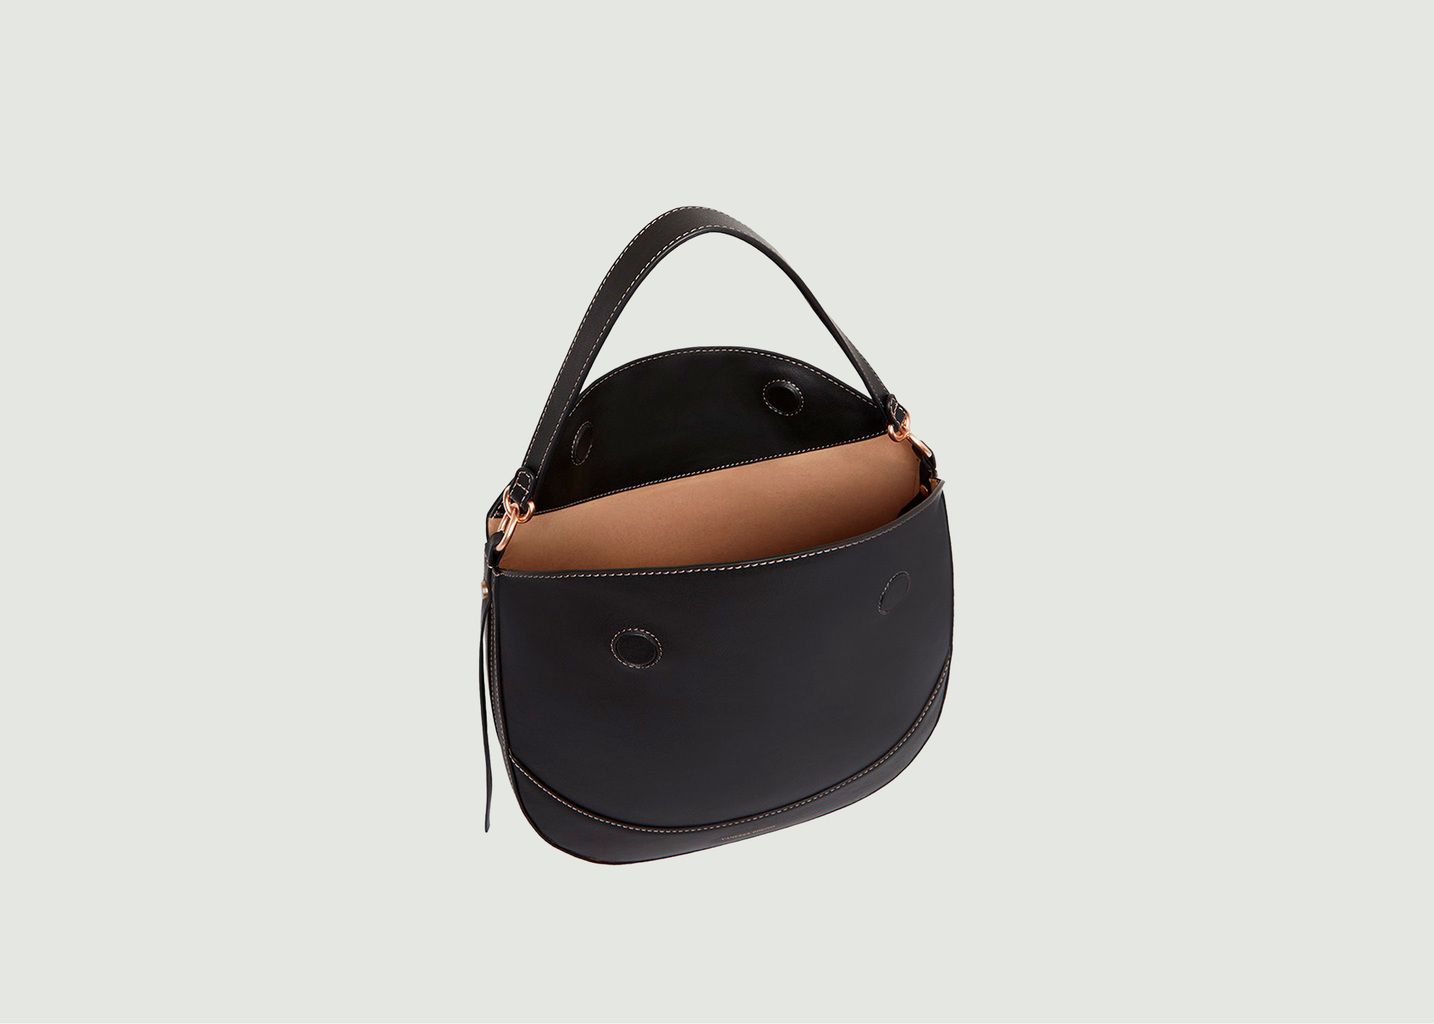 Daily leather half-moon bag - Vanessa Bruno